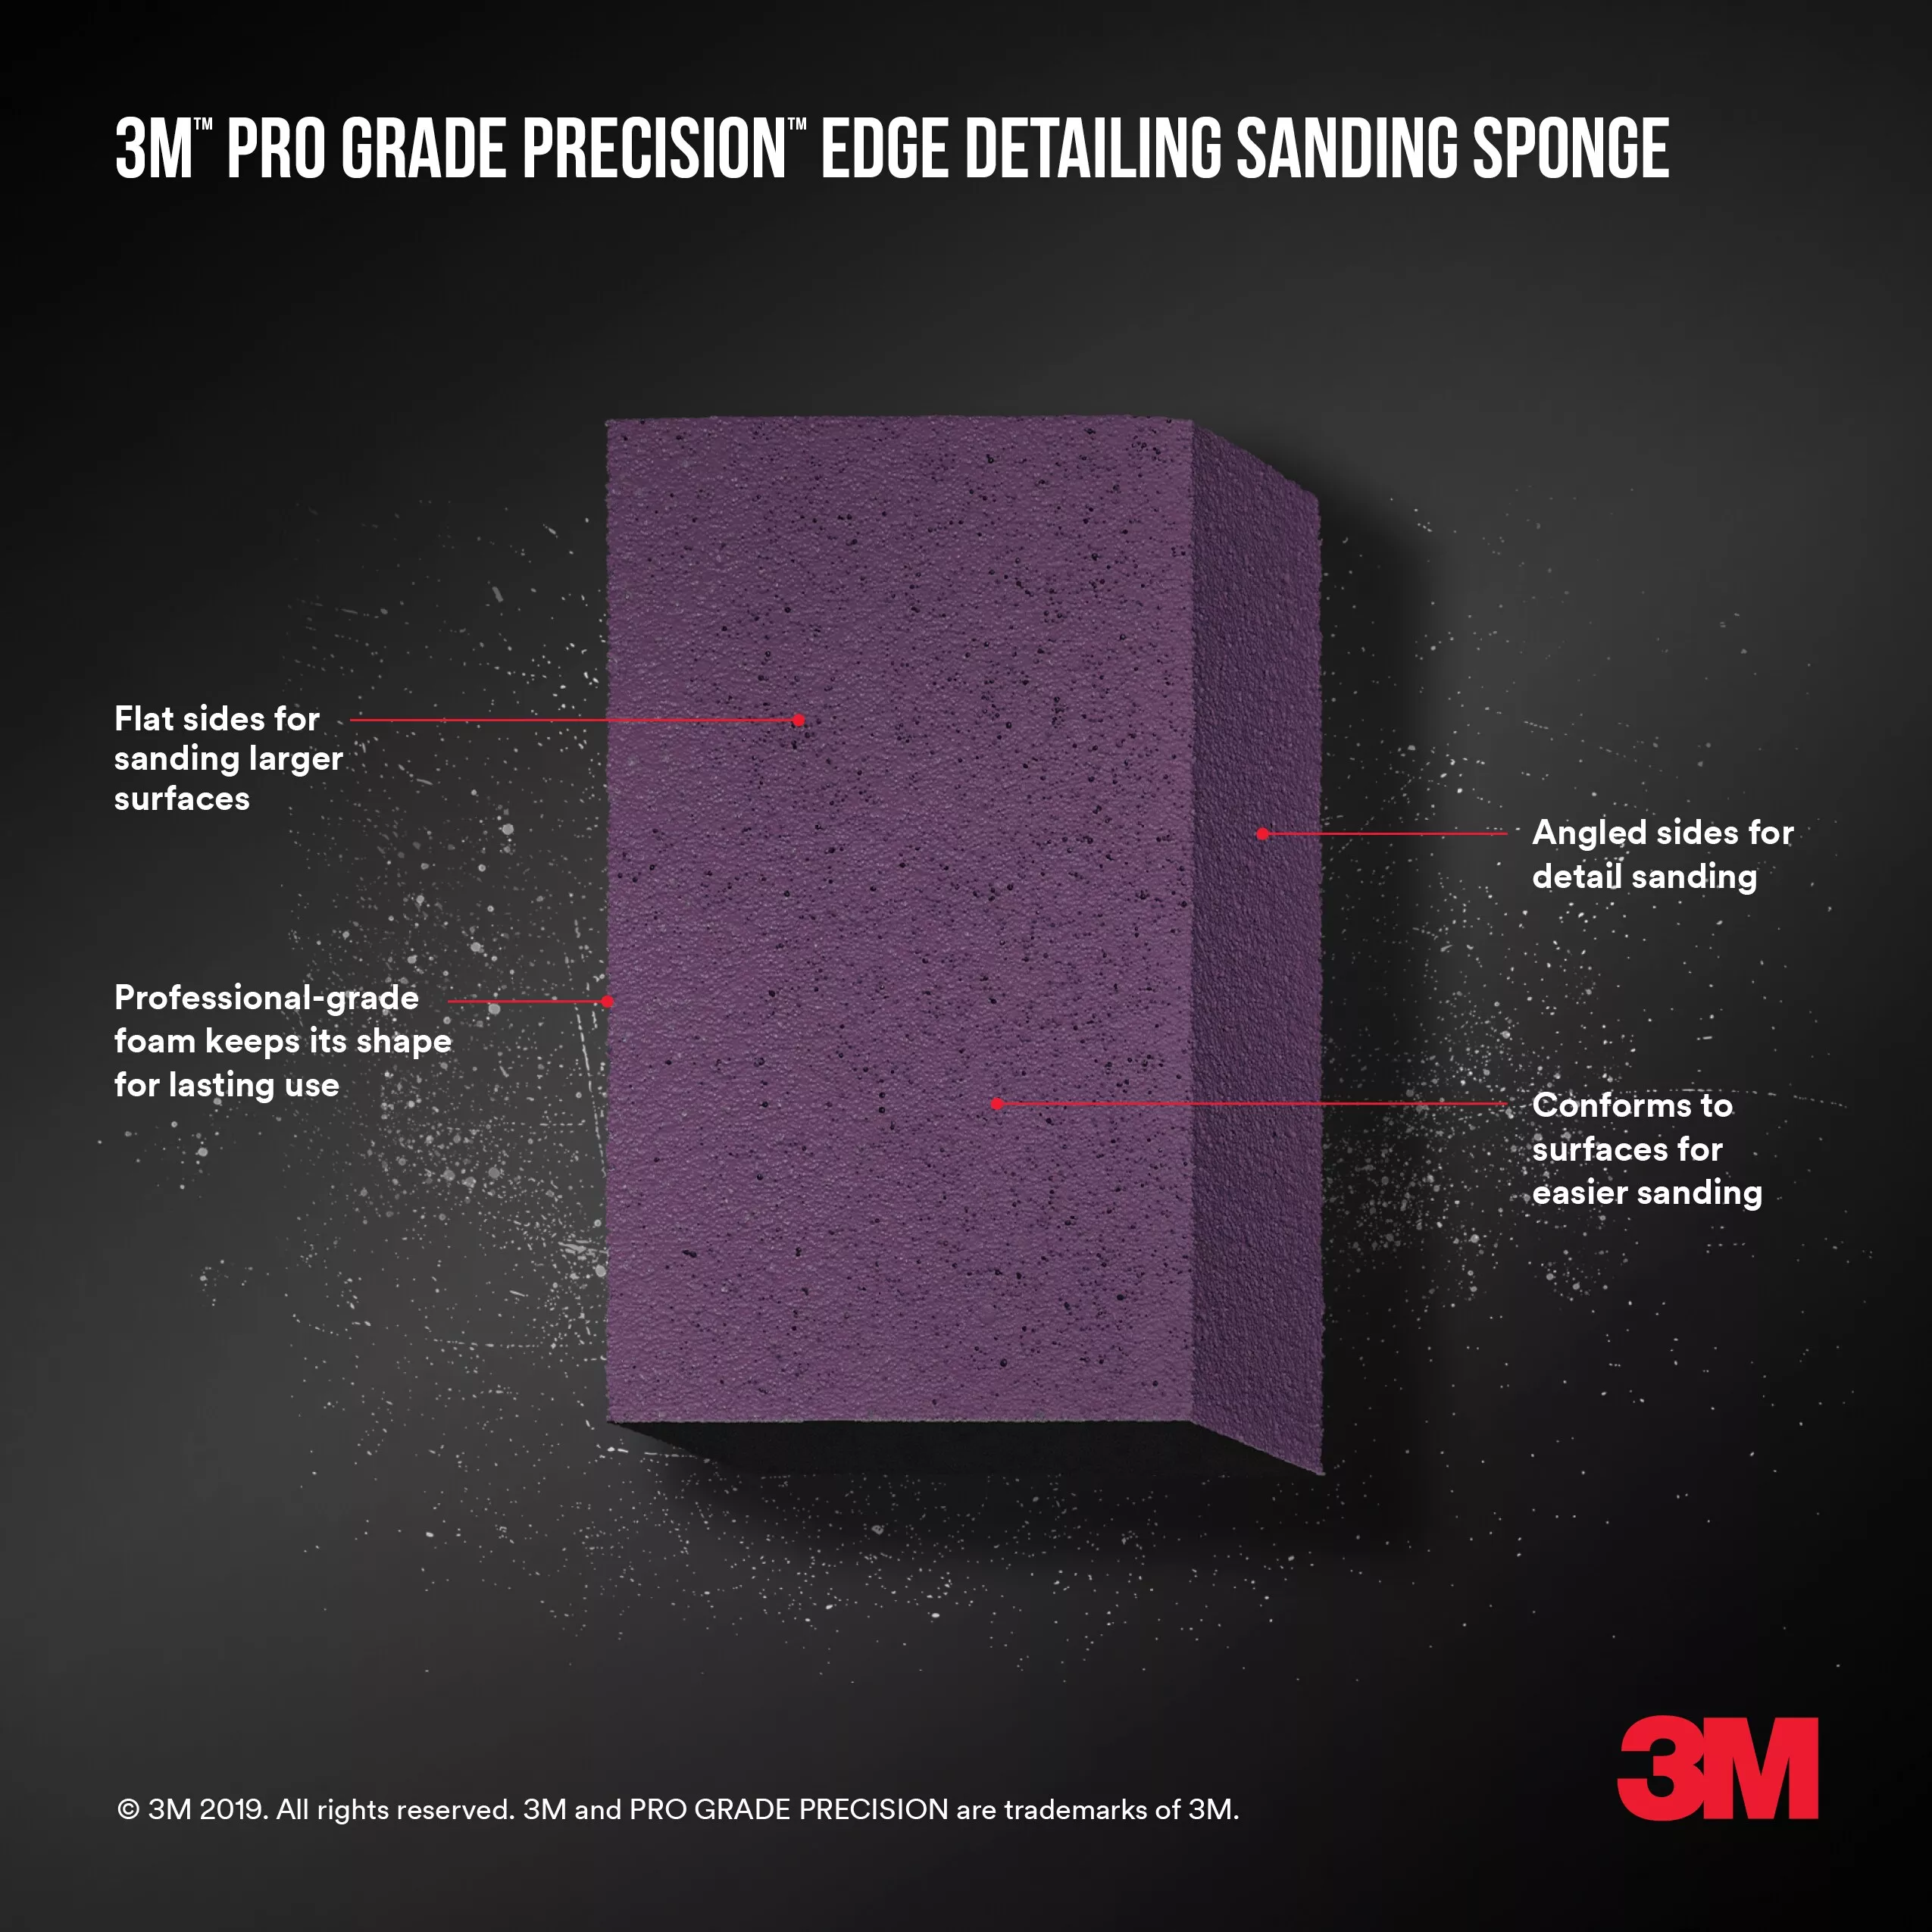 Product Number 24302TRI-XF-DA | 3M™ Pro Grade Precision™ Edge Detailing Dual Angle Sanding Sponge
24302TRI-XF-DA